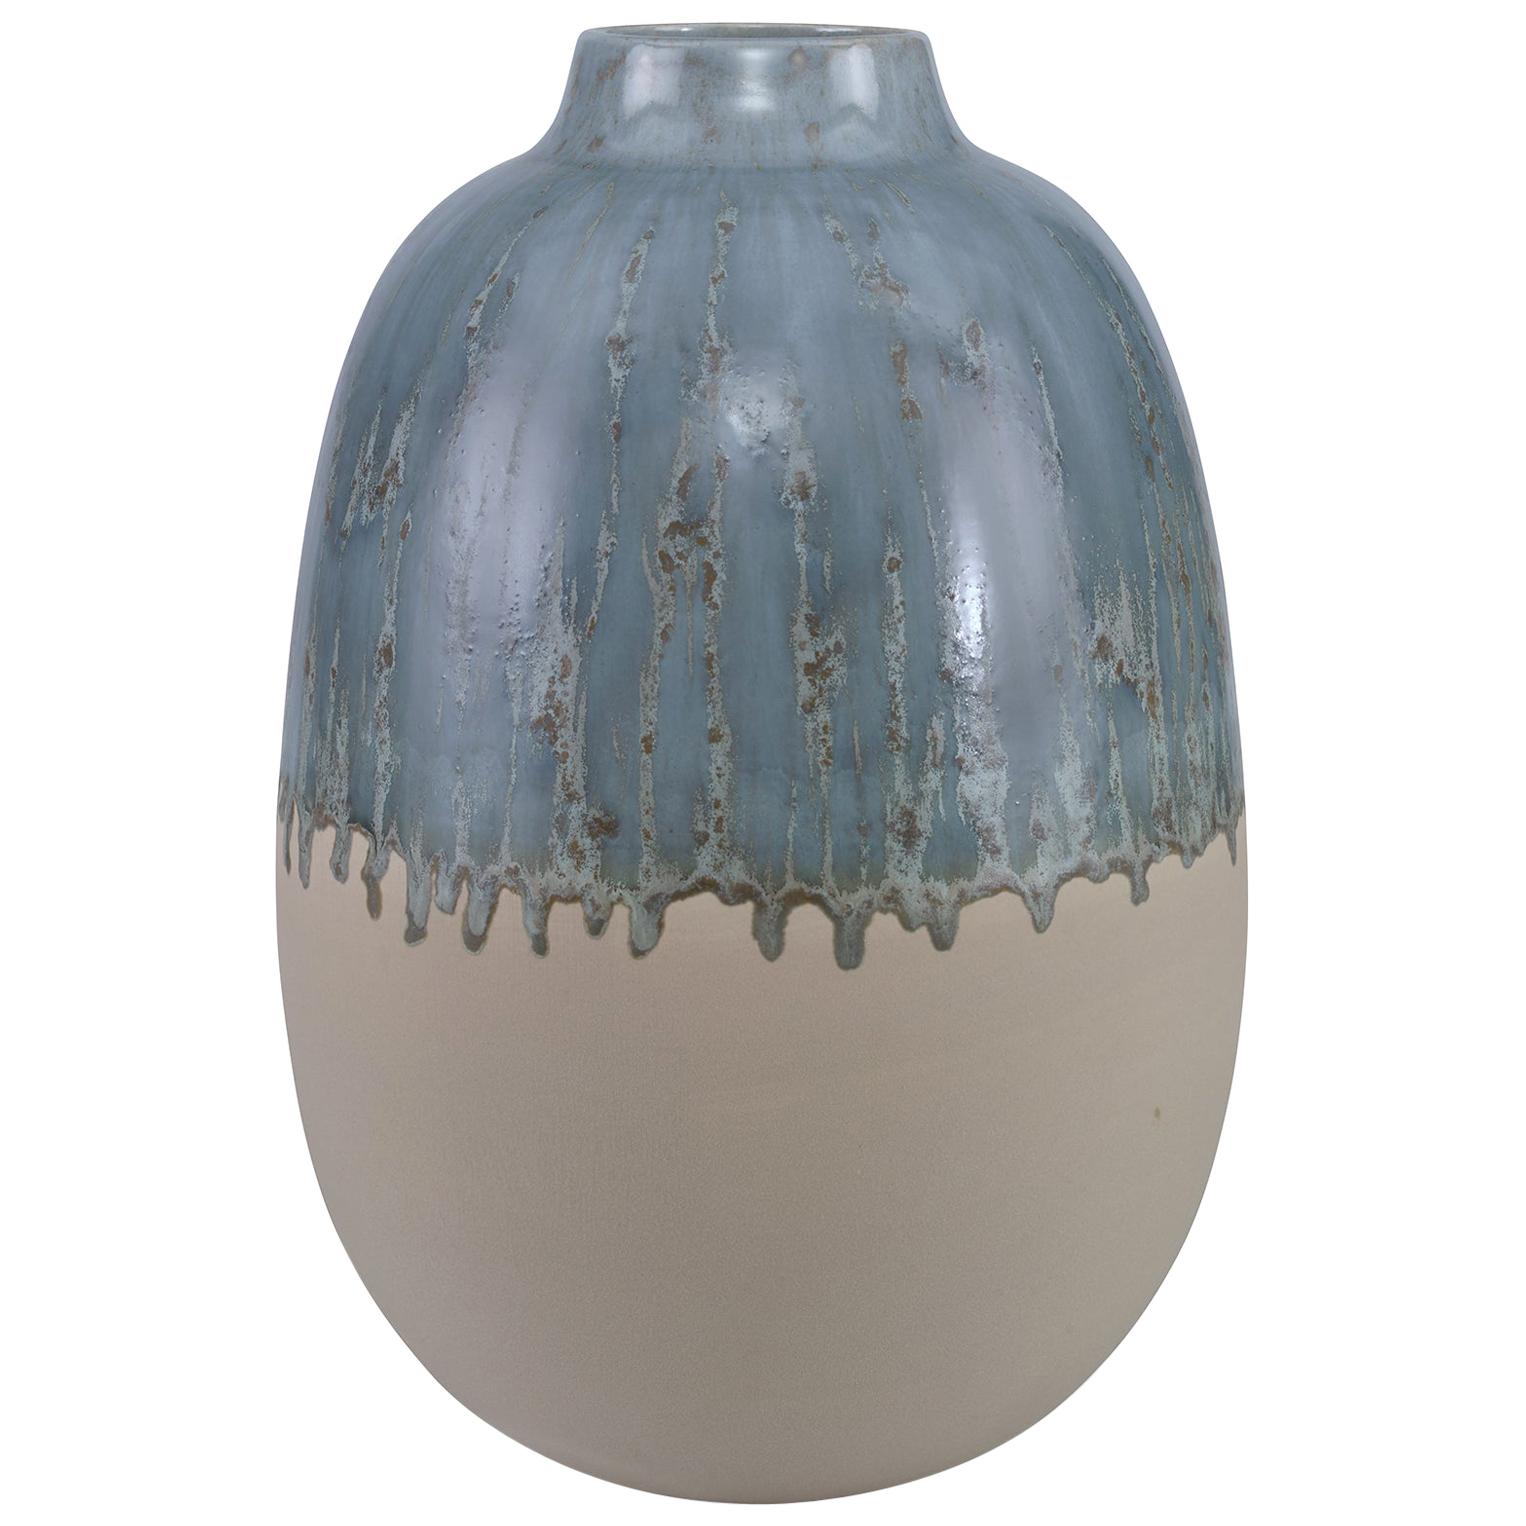 Meda Medium Vase in Silvery Blue and Cream Ceramic by CuratedKravet